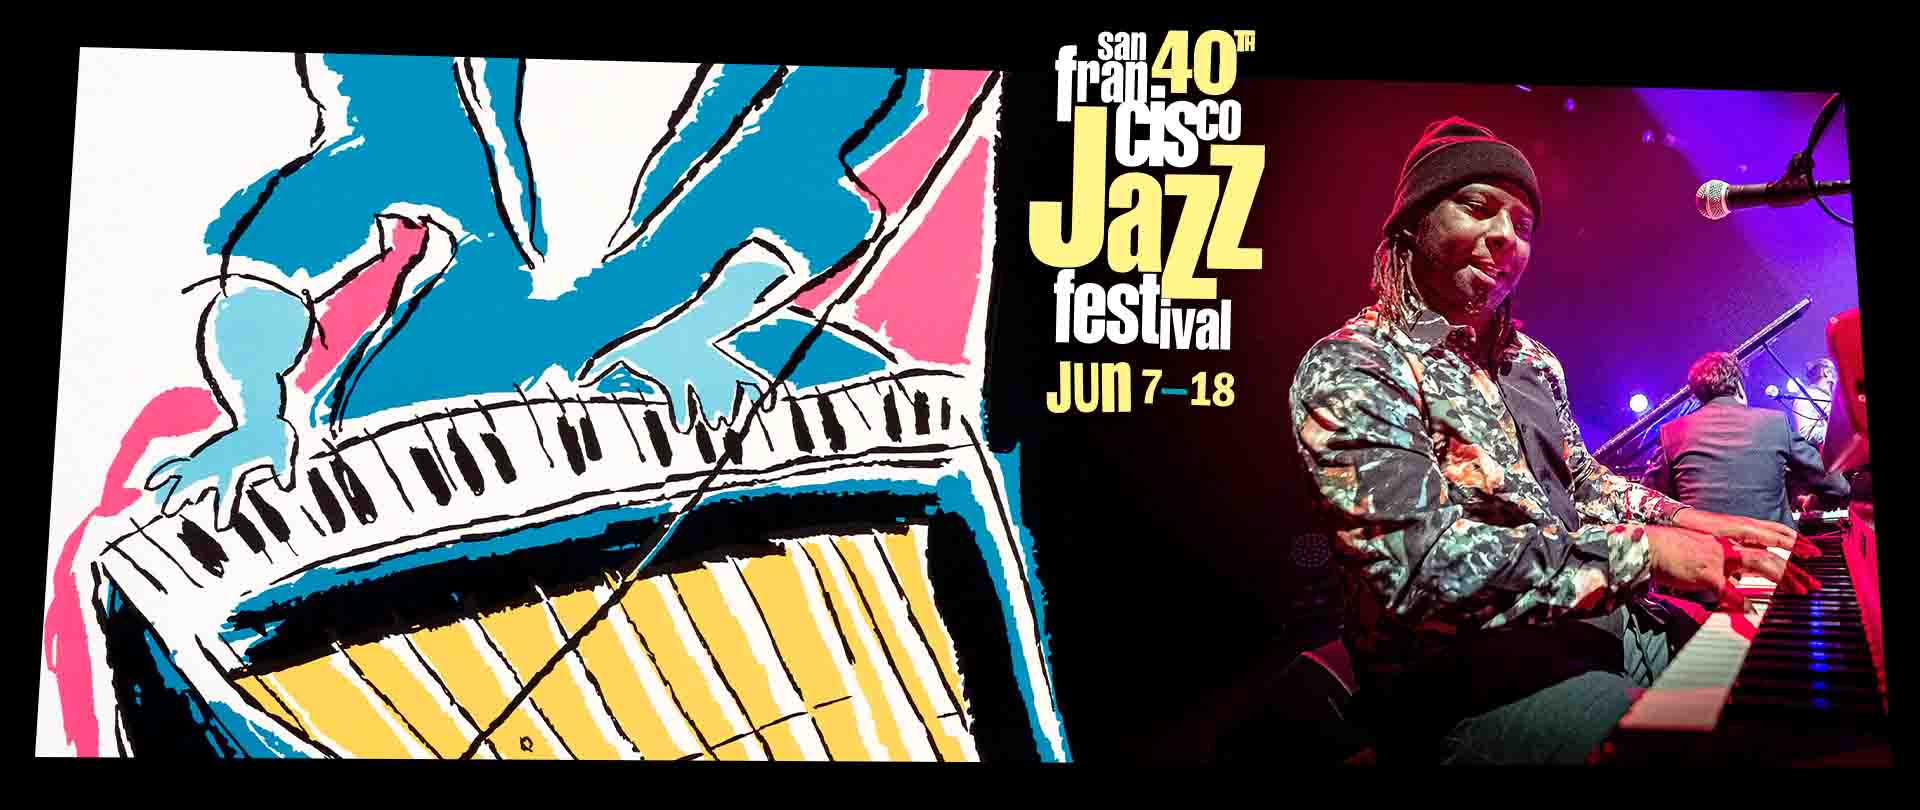 Rolando Luna at the keyboard with the 40th Annual San Francisco Jazz Festival artwork